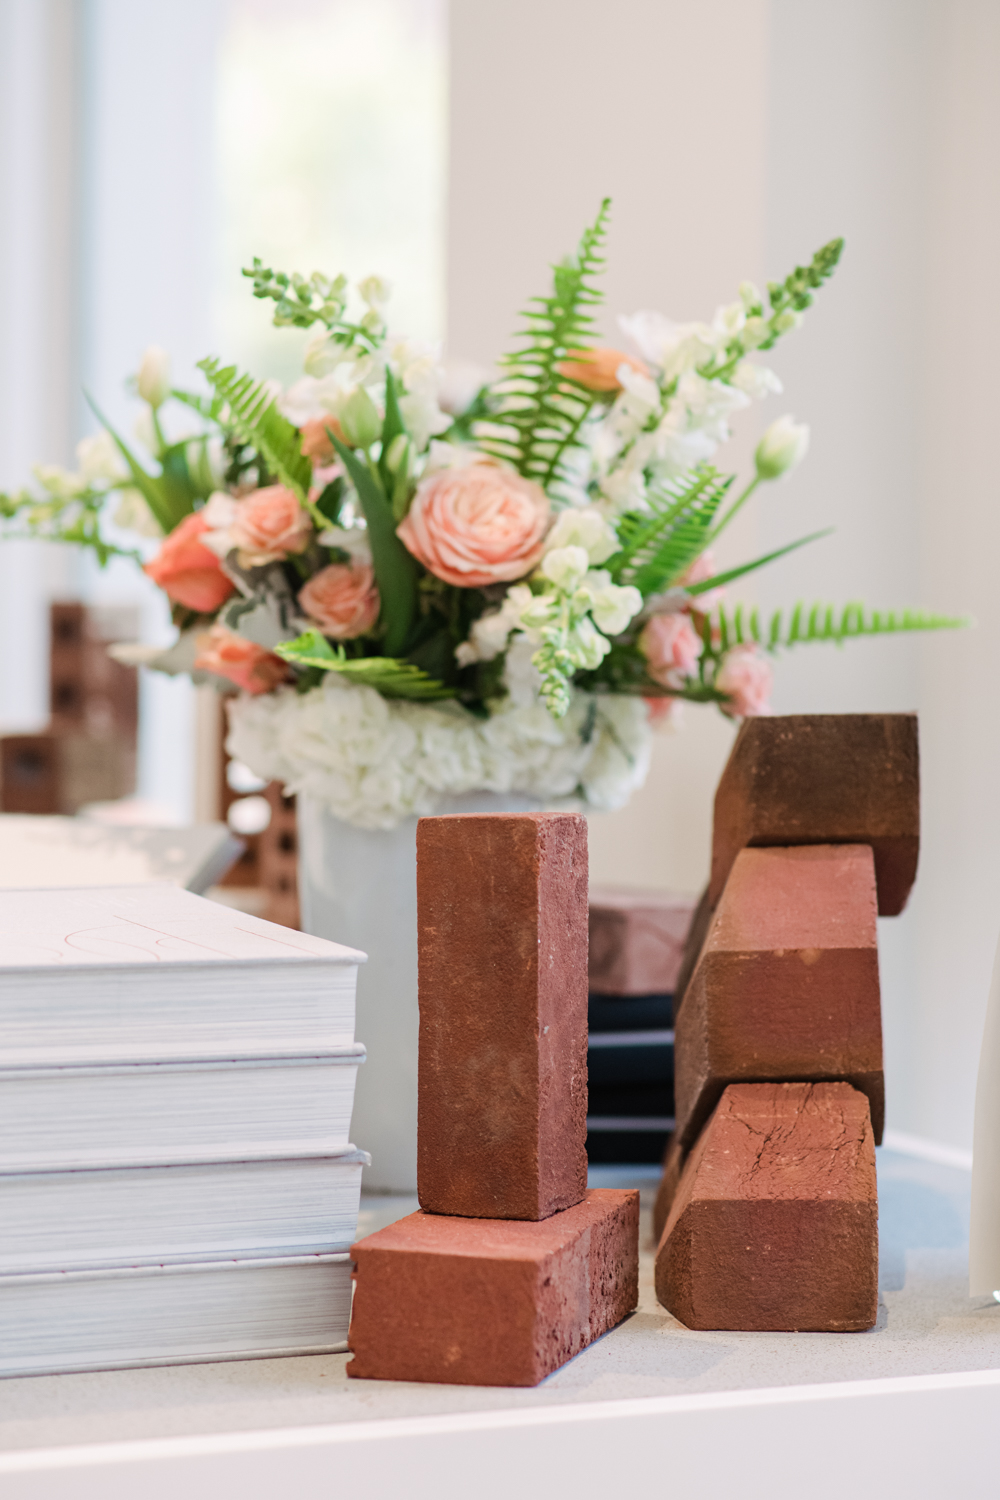 flower arrangement and bricks arranged on table